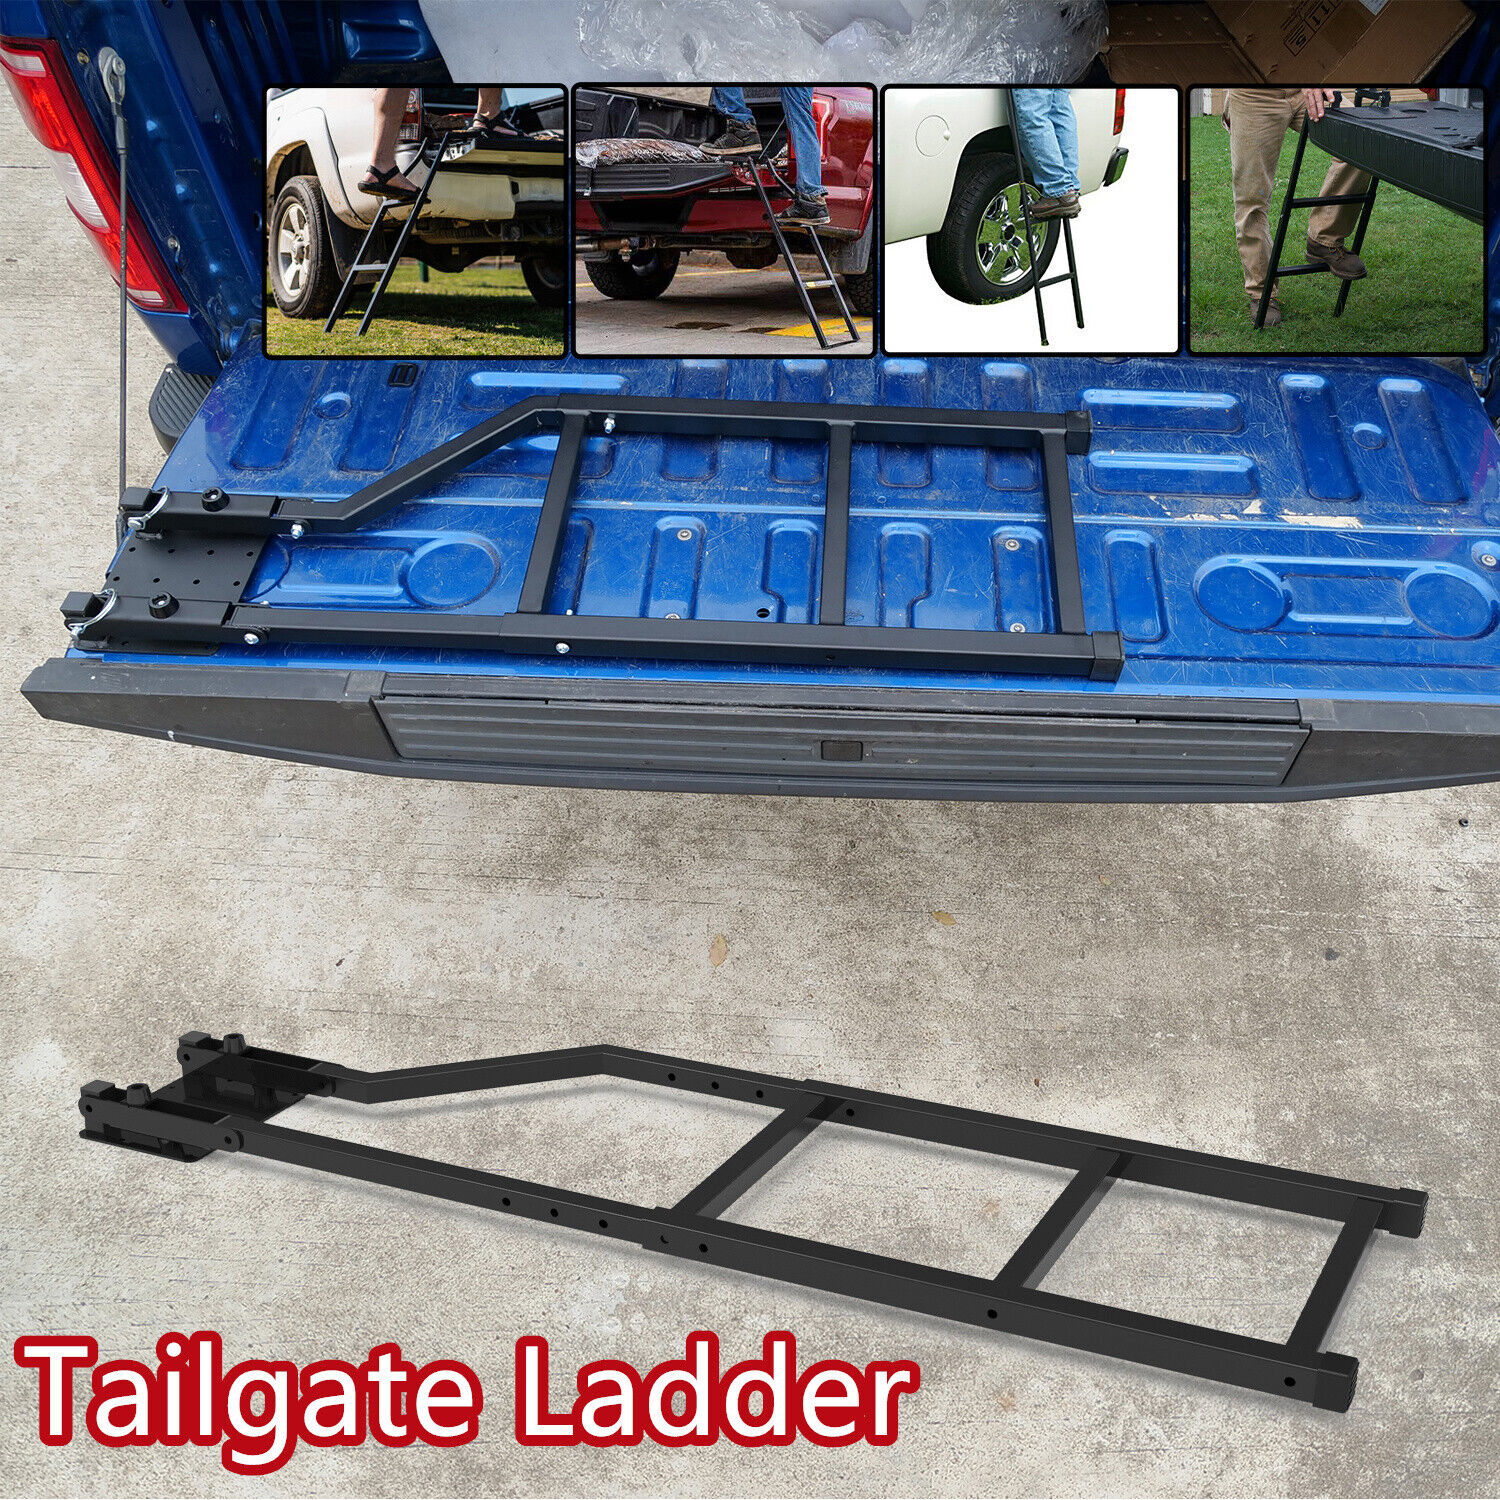 Universal Tailgate Ladder Adjustable Rear Gate Step Ladders for Pickup Truck